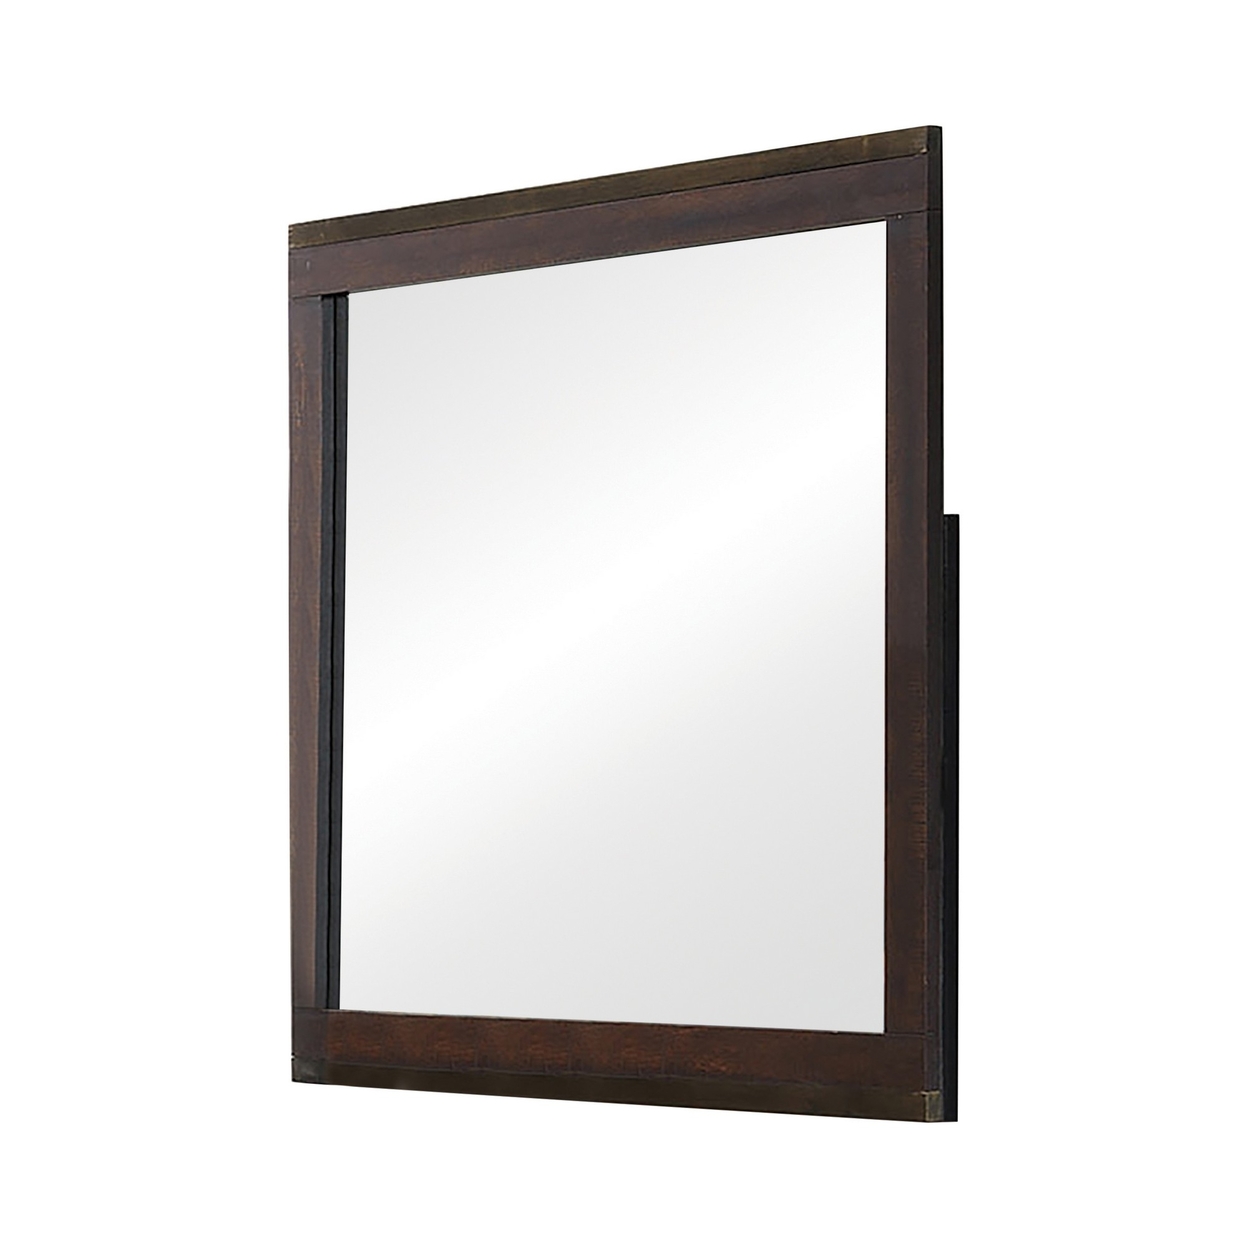 Wooden Frame Mirror With Mounting Hardware, Dark Brown- Saltoro Sherpi